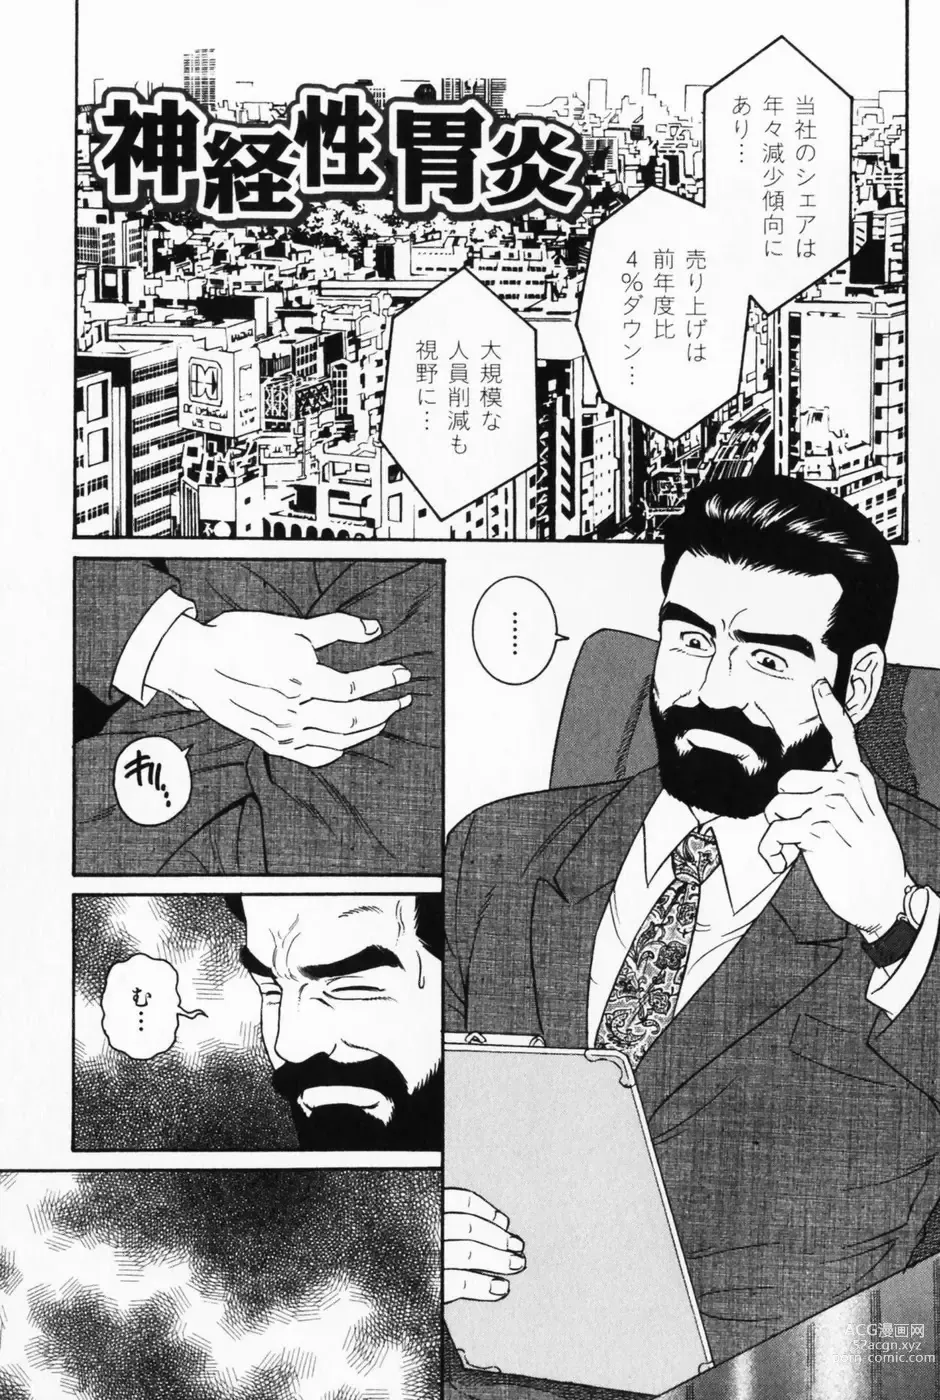 Page 1 of manga Shinkei-sei Ien